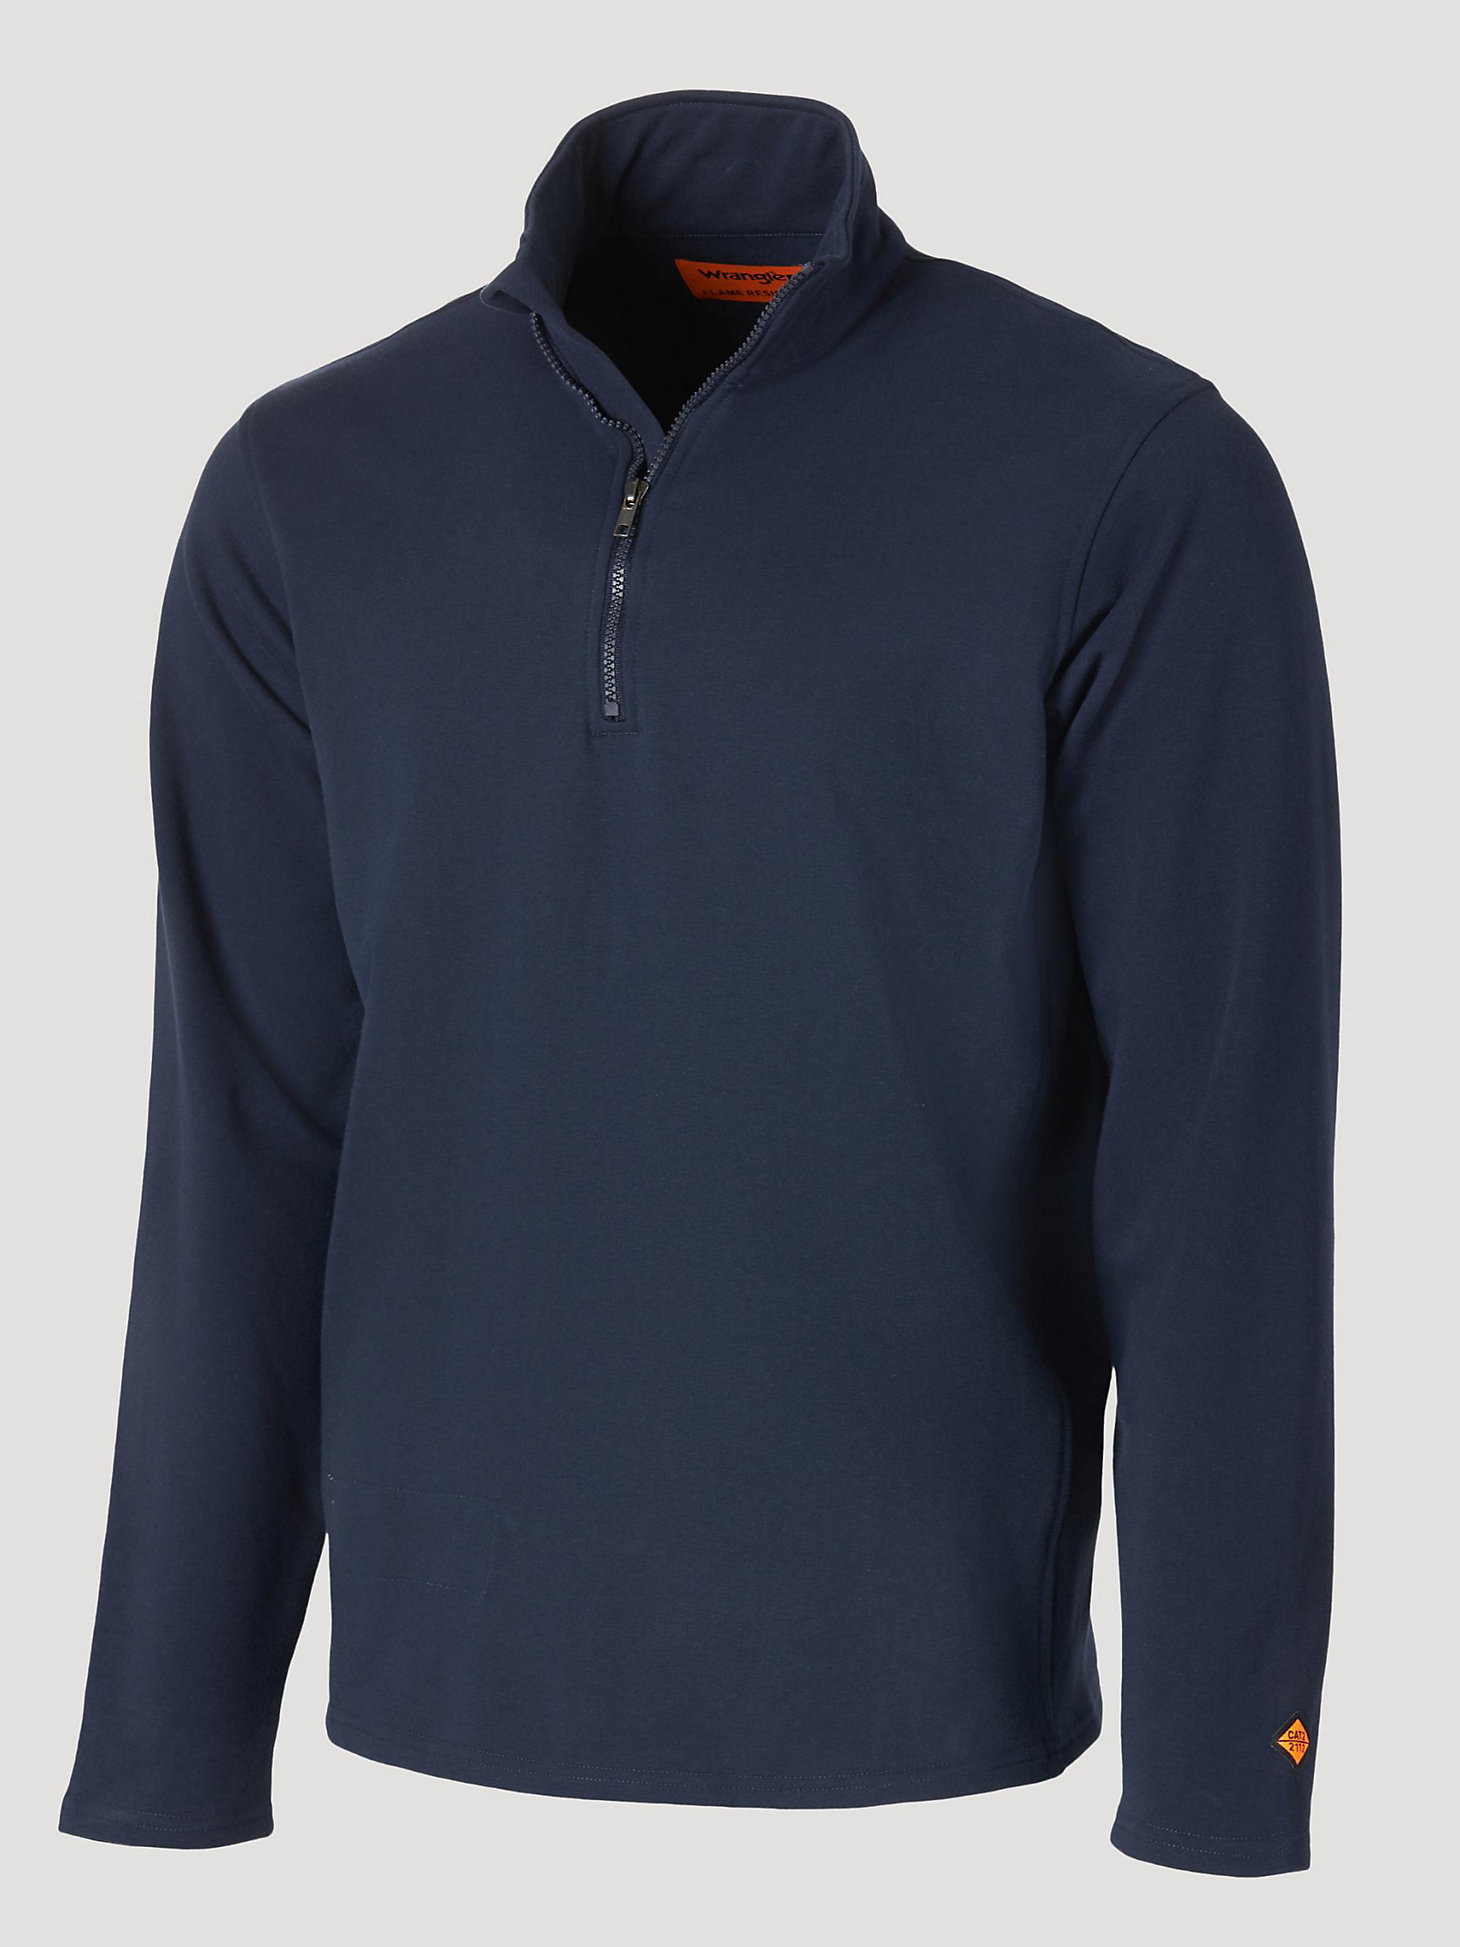 Wrangler® FR Flame Resistant Long Sleeve Quarter-Zip Fleece Pullover in Navy alternative view 5